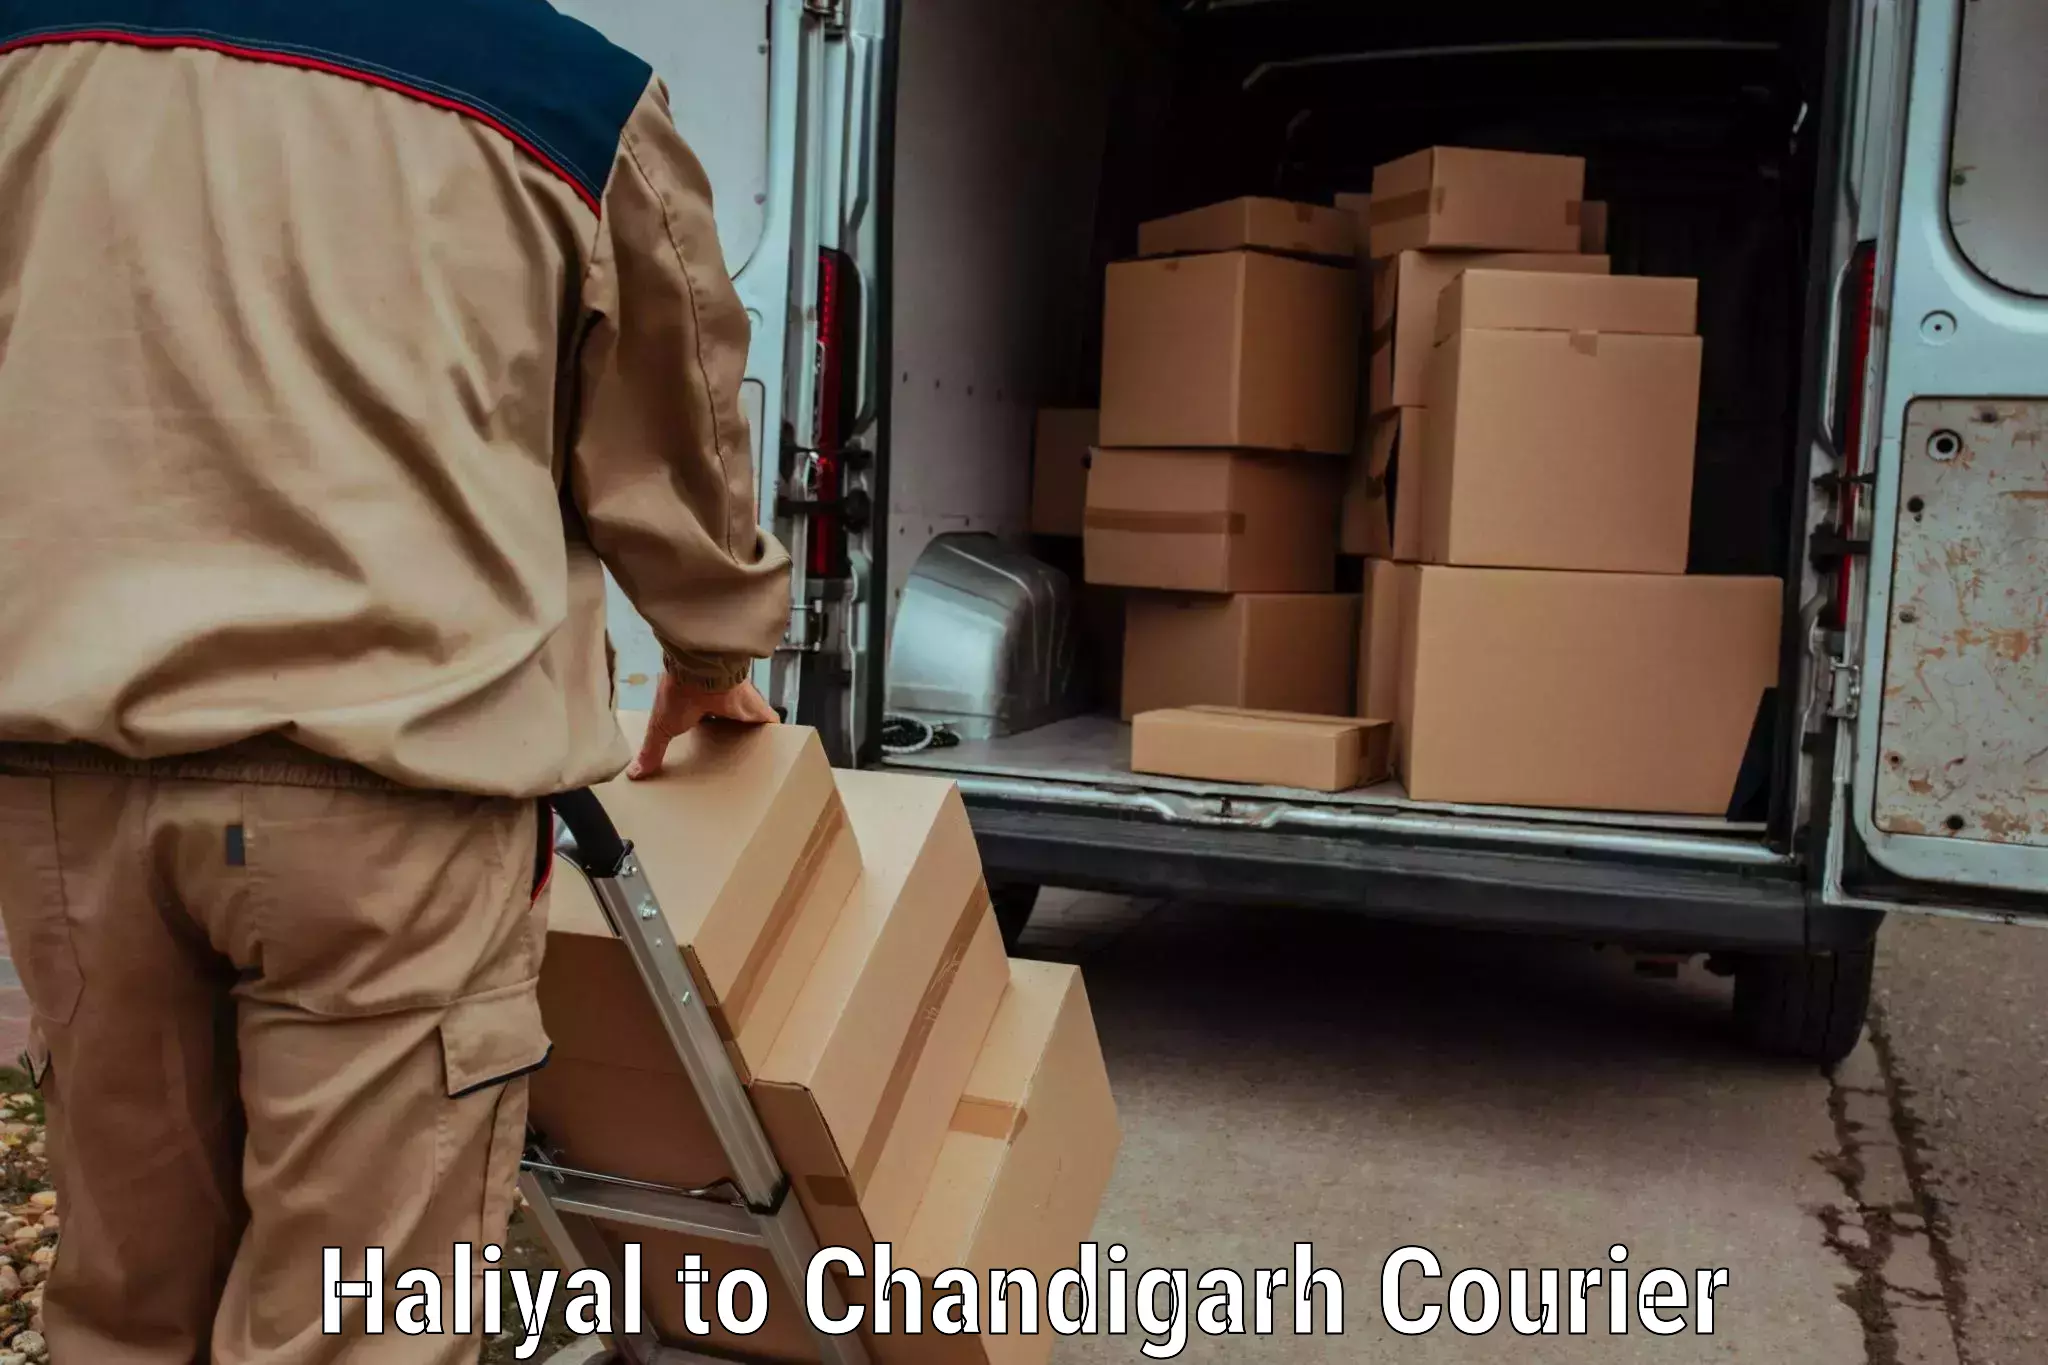 Luggage transport company Haliyal to Chandigarh